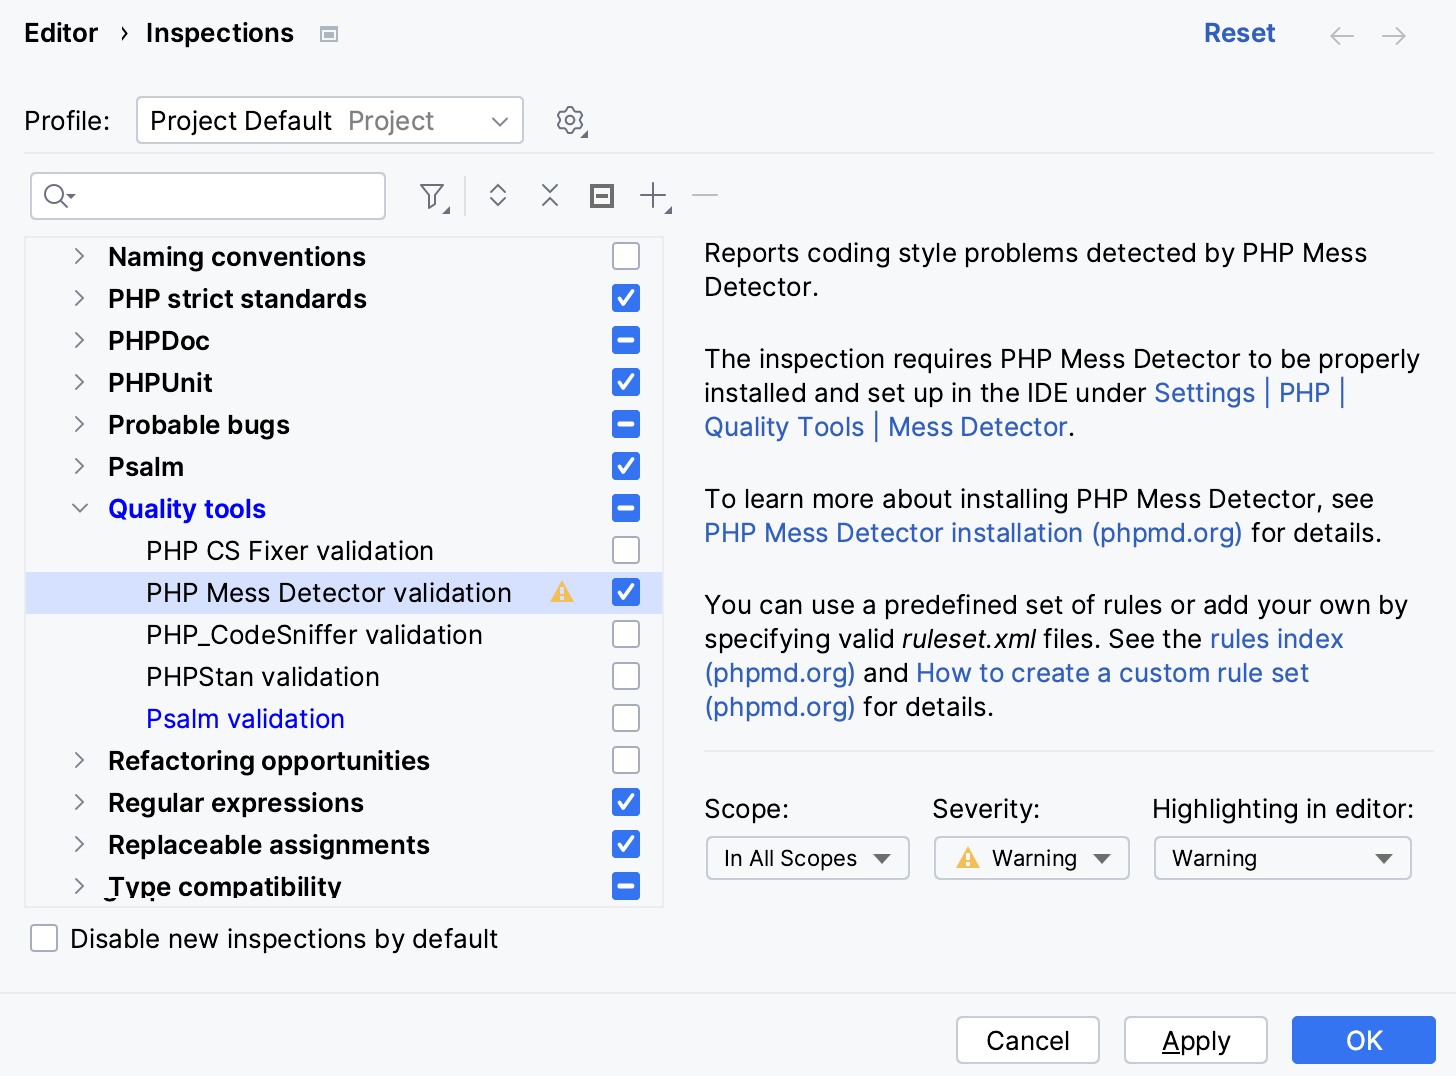 Select PHP Mess Detector validation checkbox